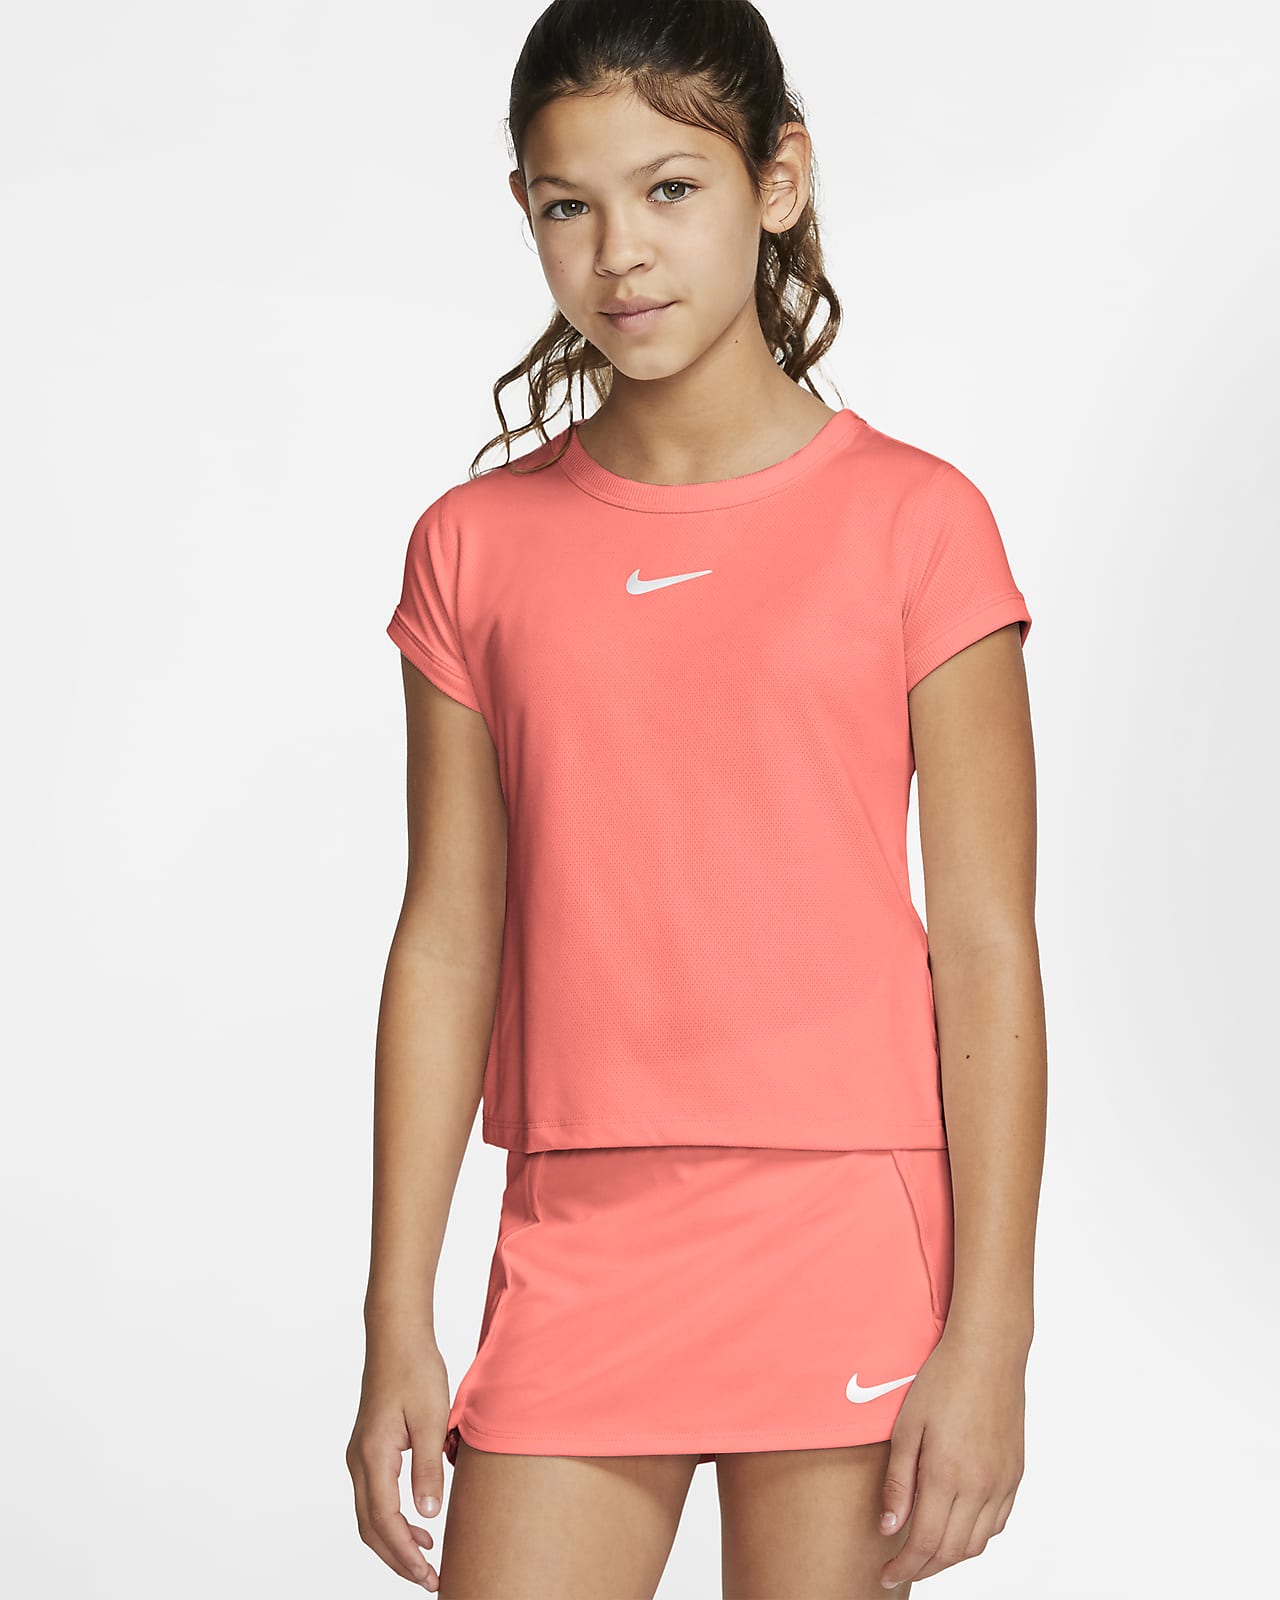 NikeCourt Dri-FIT Older Kids' (Girls') Tennis Top. Nike LU